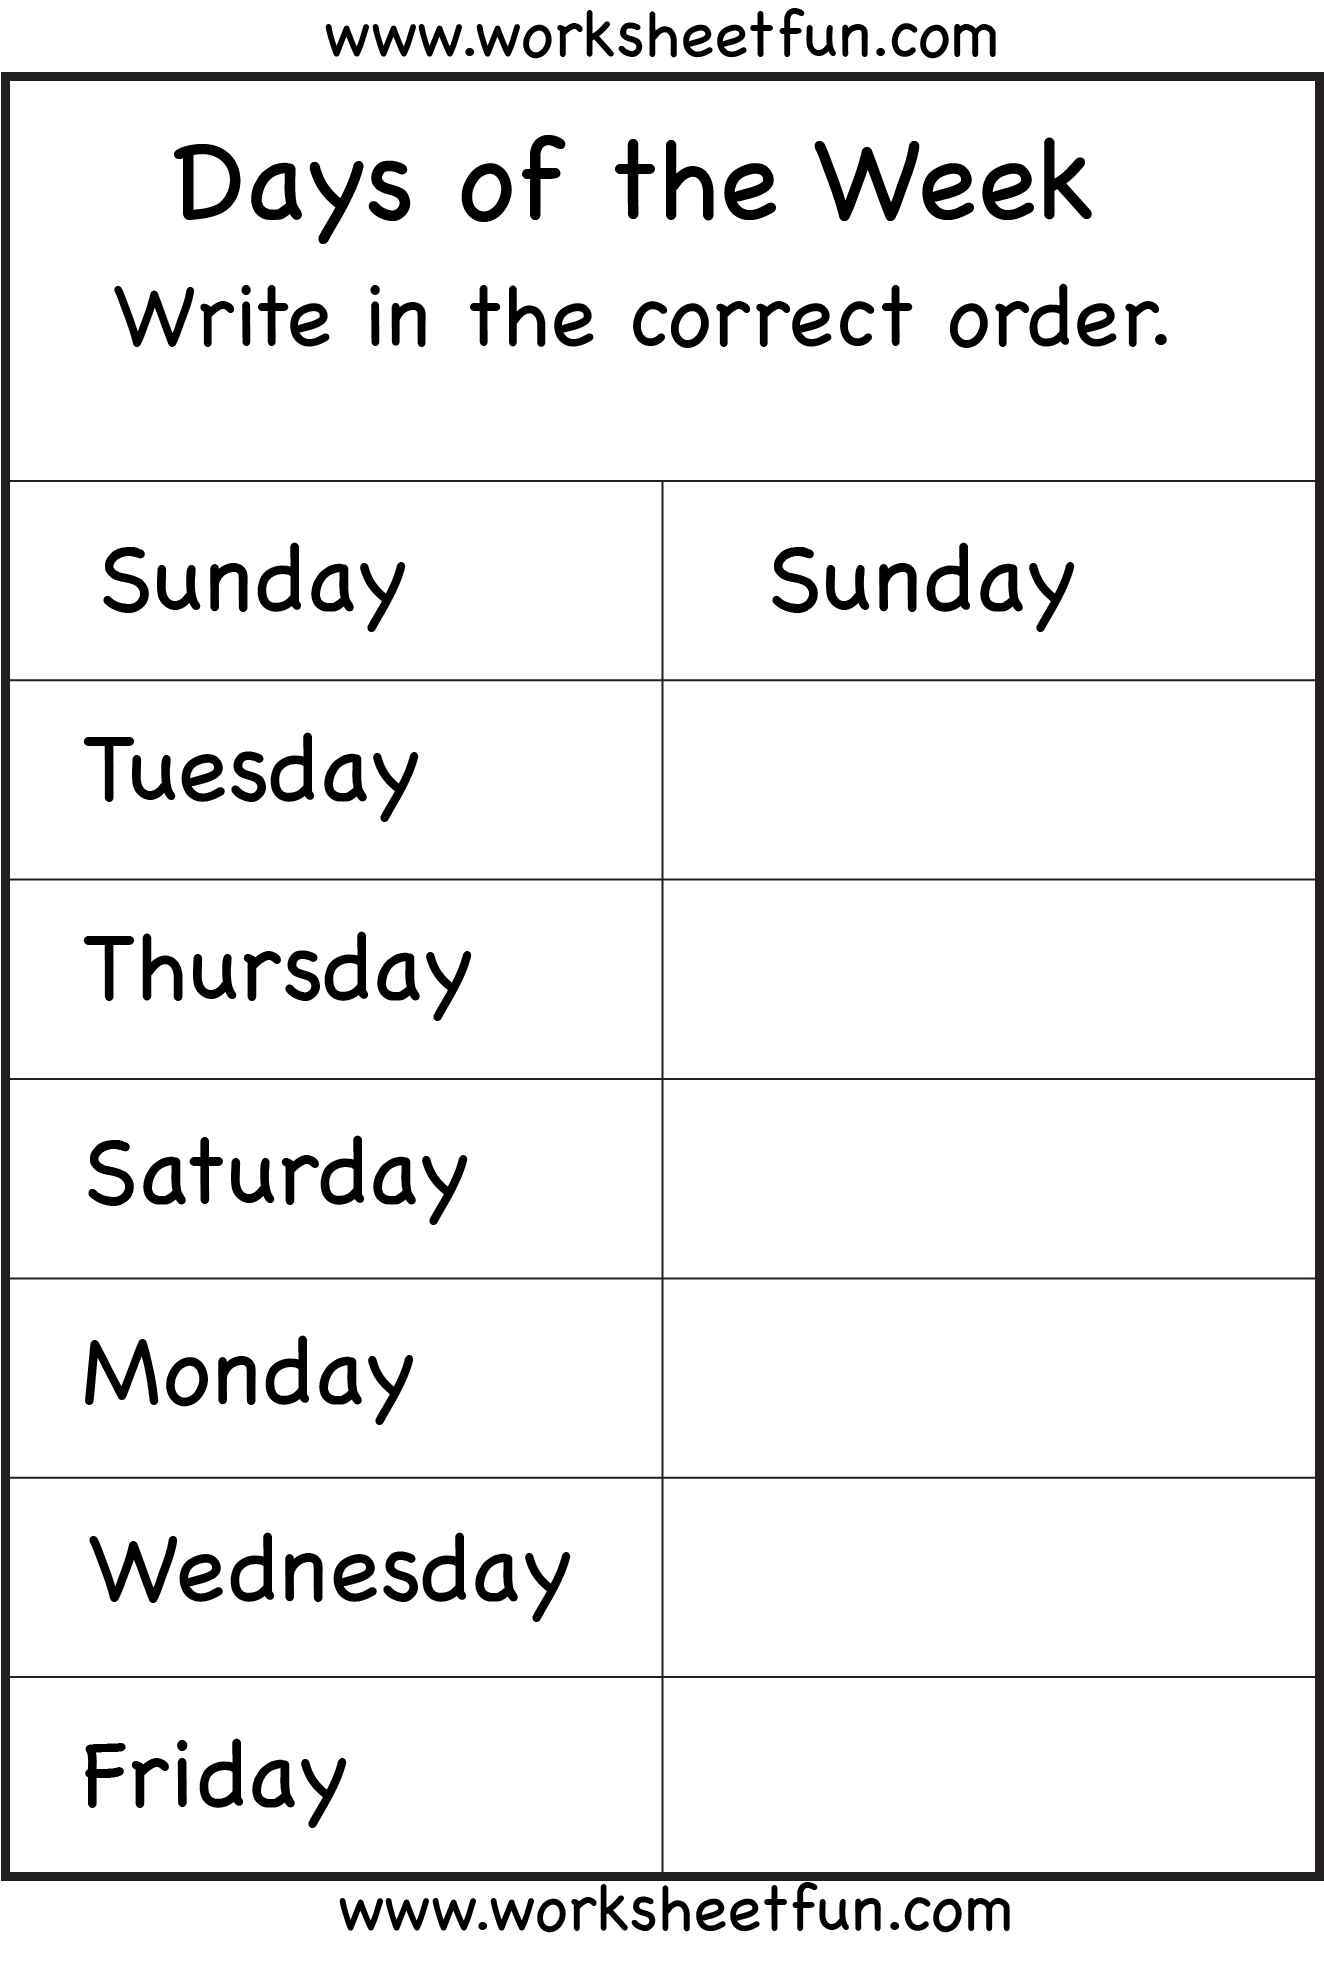 days of the week in order worksheets